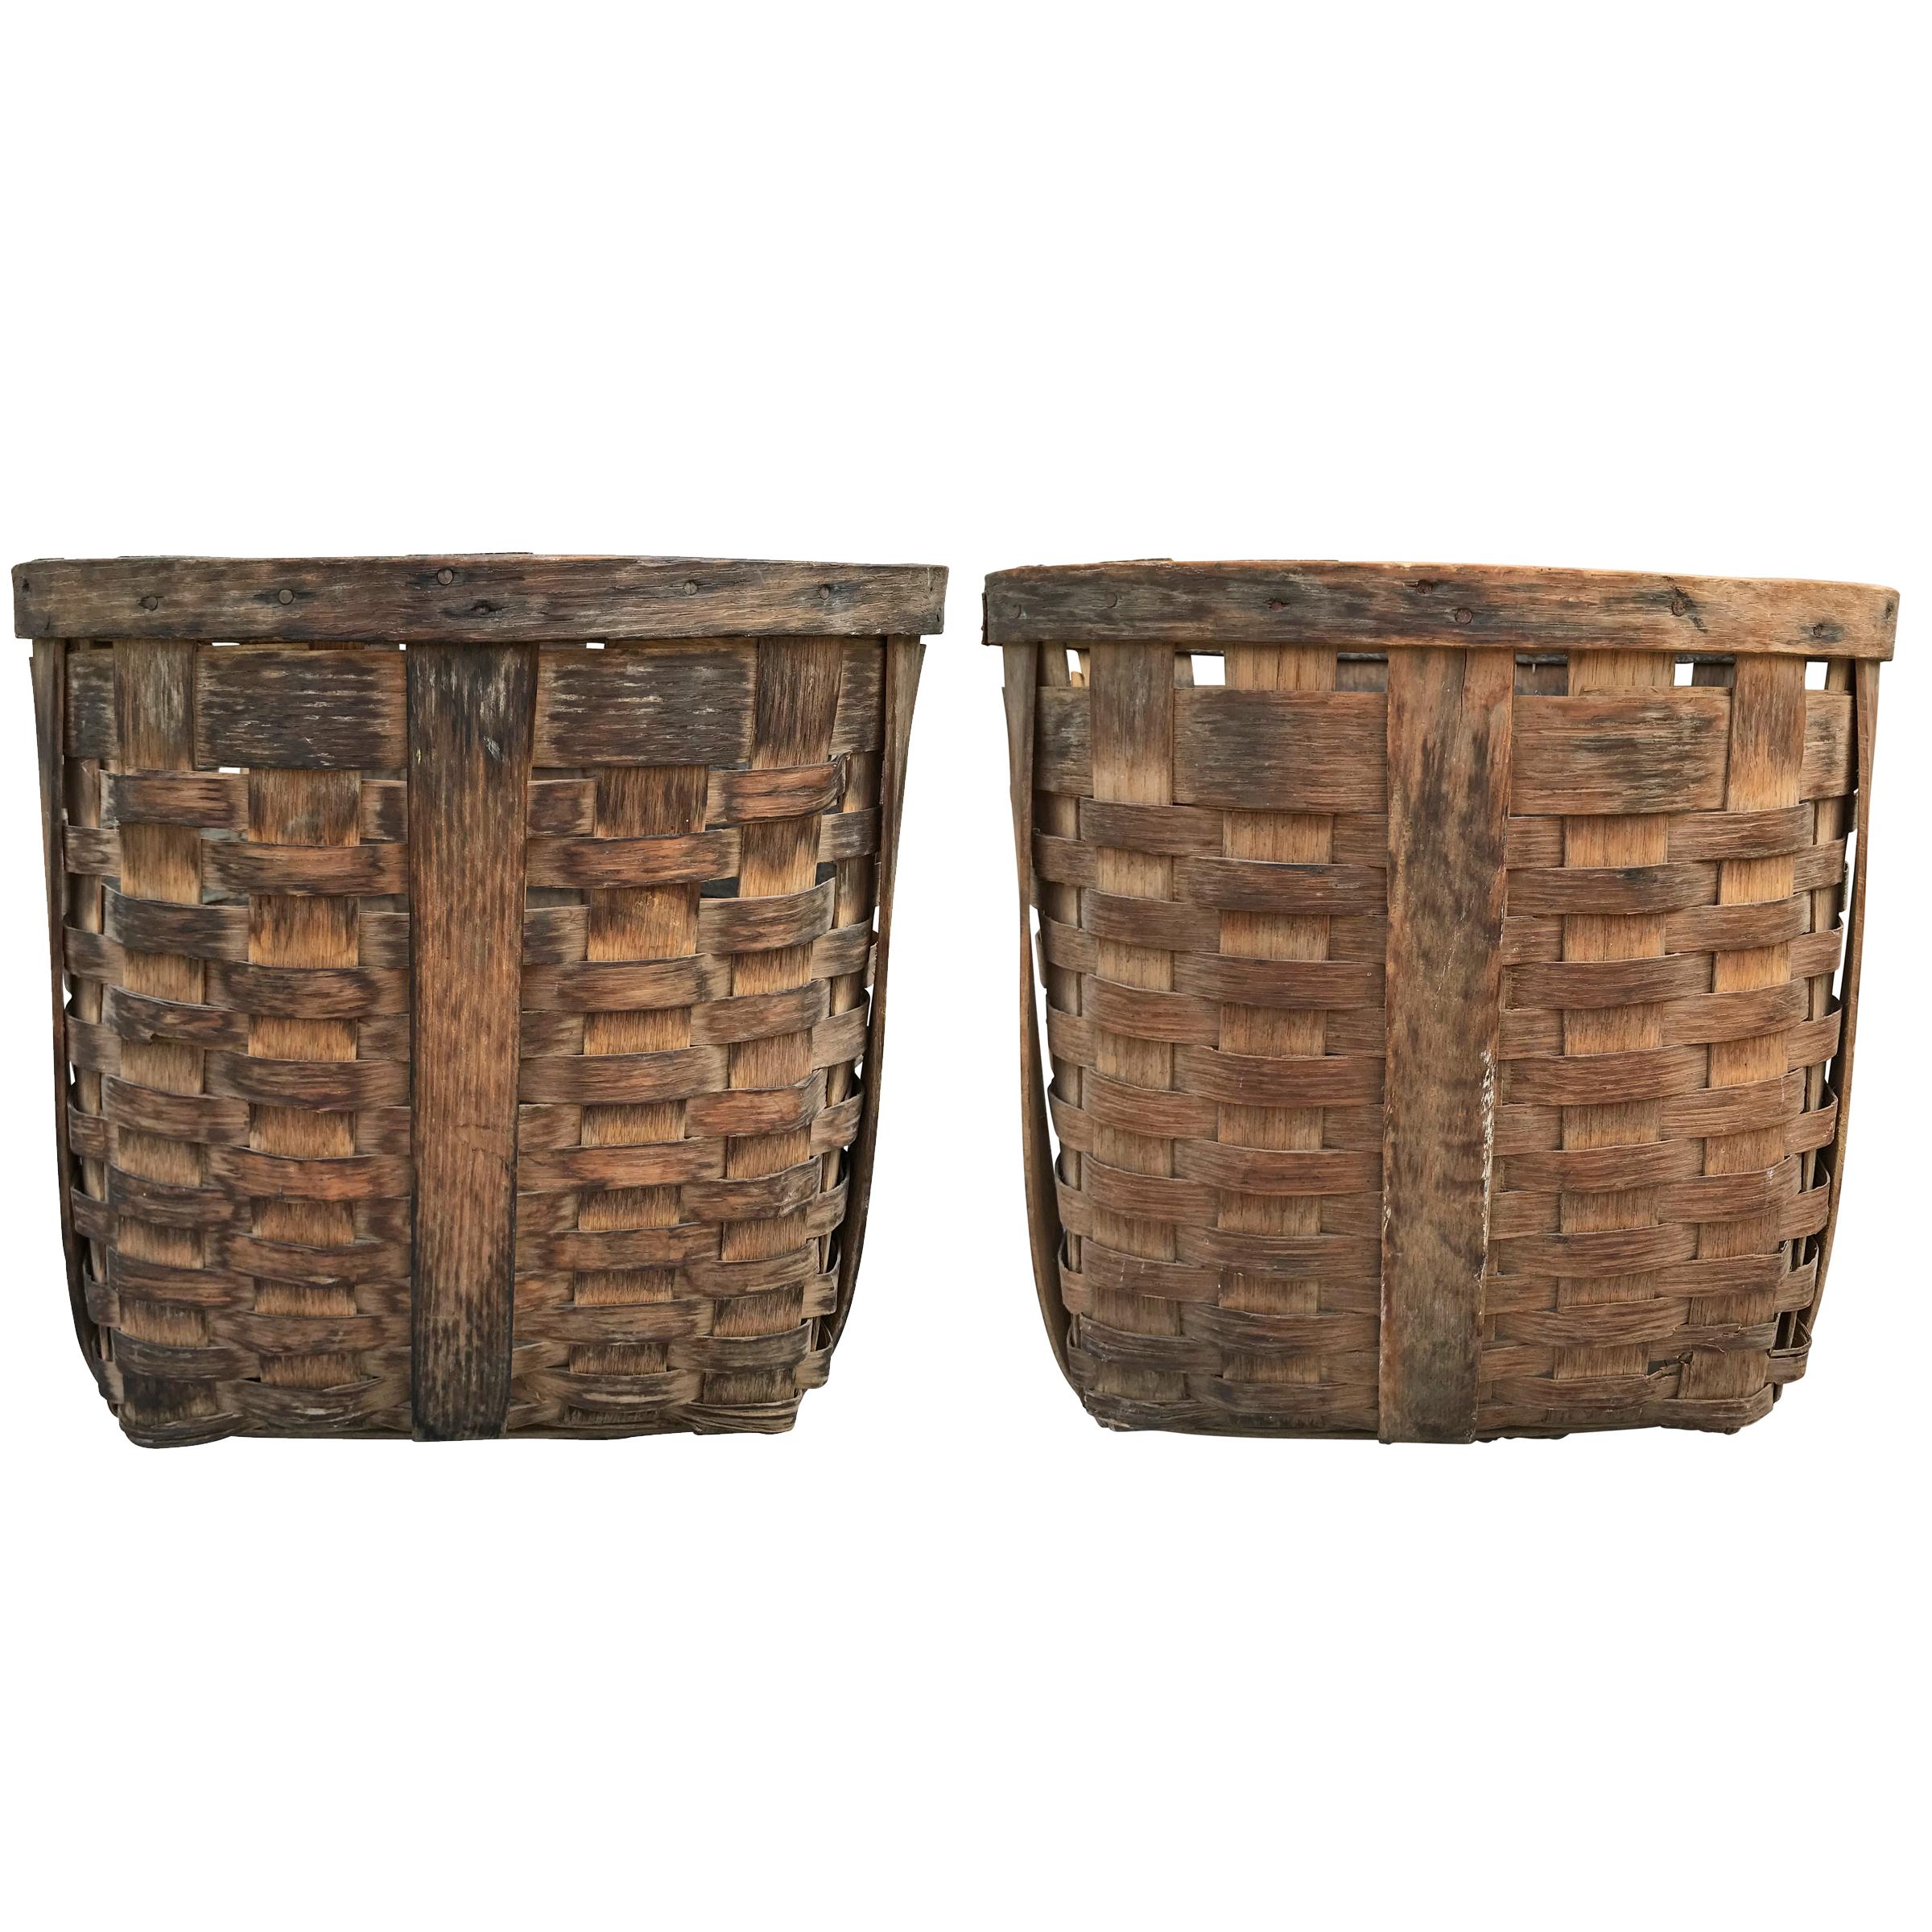 Pair of 19th Century American Potato Baskets